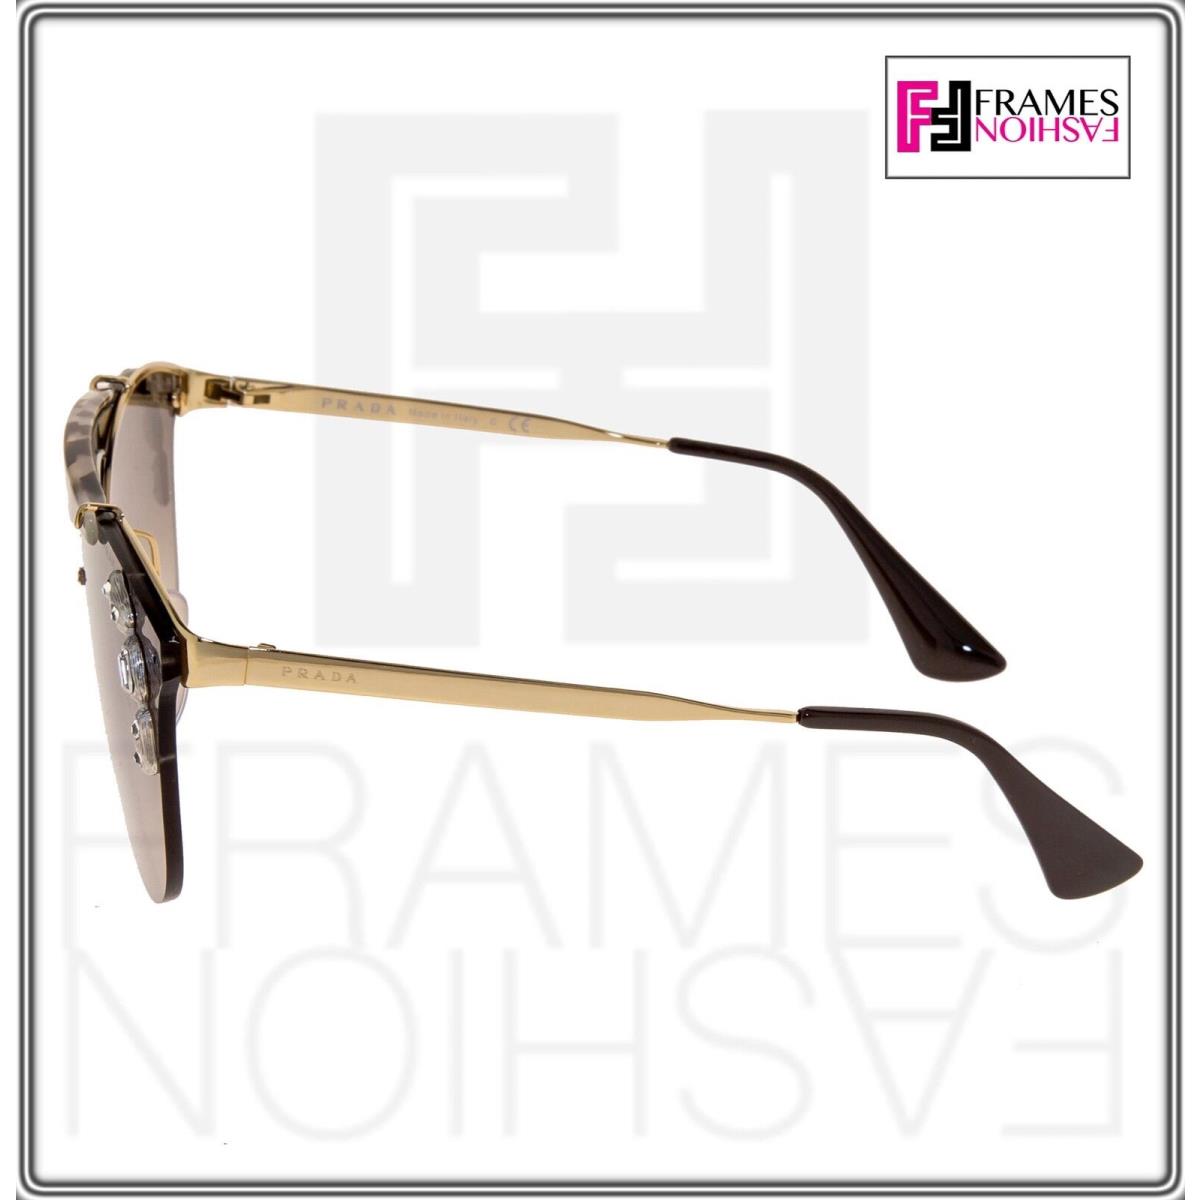 Prada 53U Ornate Shield Brow Bar Jewel Sunglasses Gold Chalk White Brown PR53US - Frame: Gold, Lens: Brown